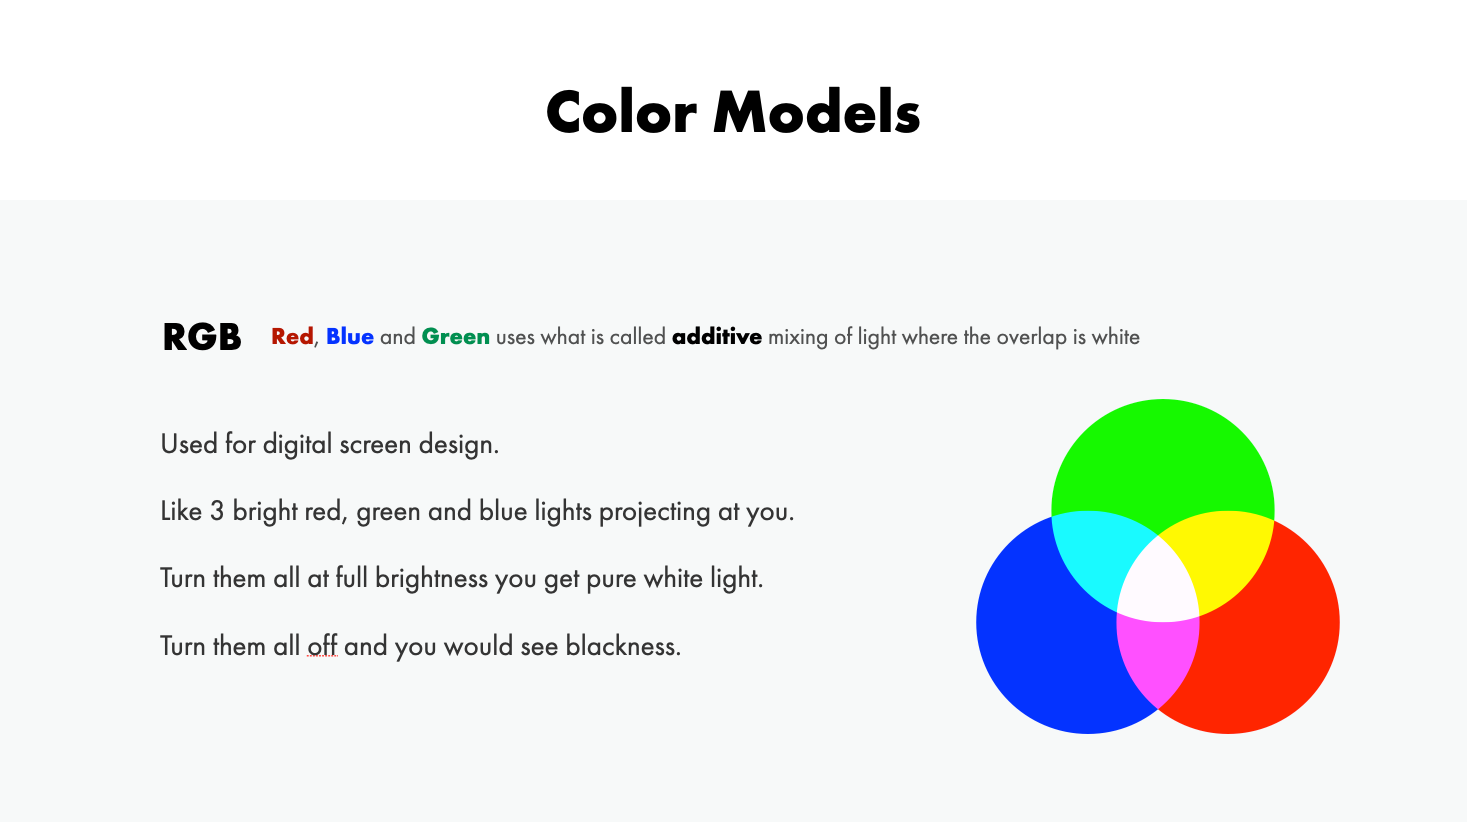 RGB Color Model